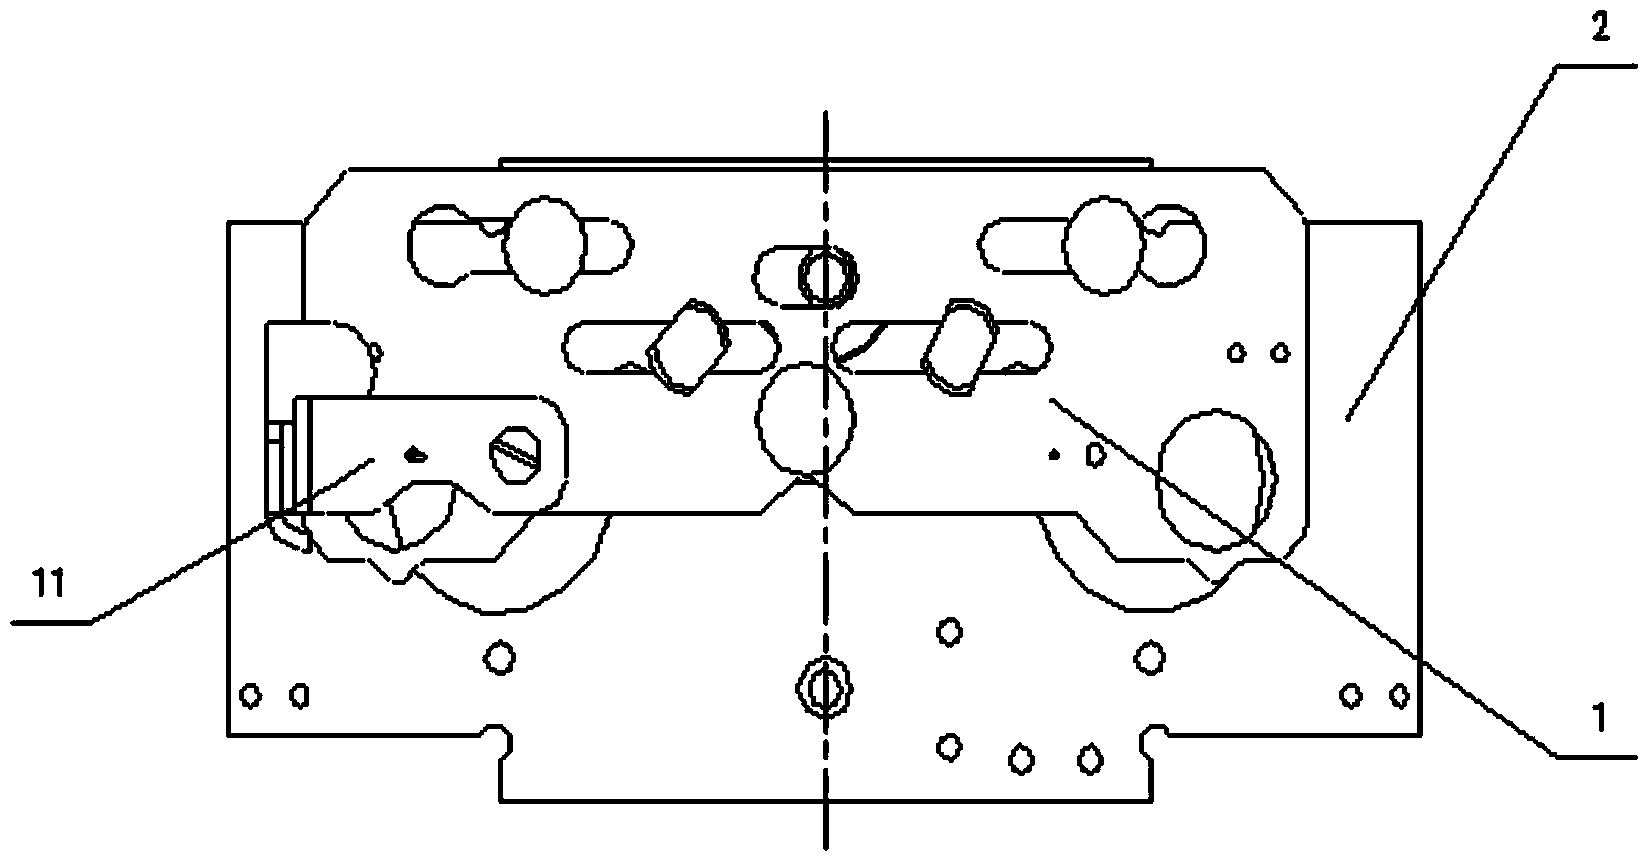 Manual interlocking device of three-station mechanism